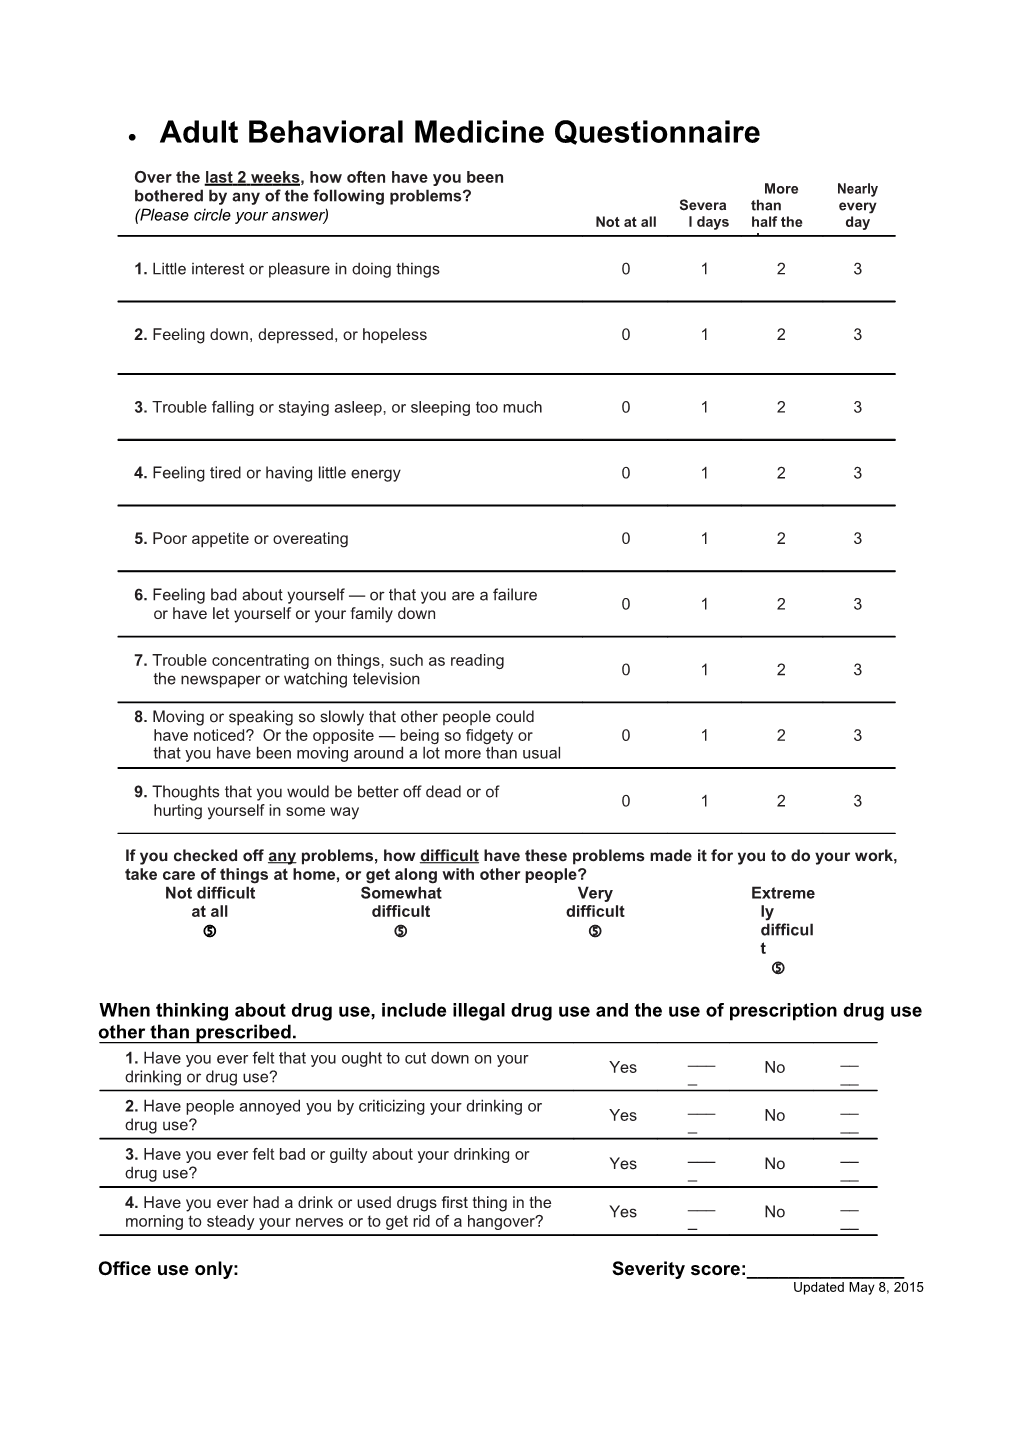 Adult Behavioral Medicine Questionnaire